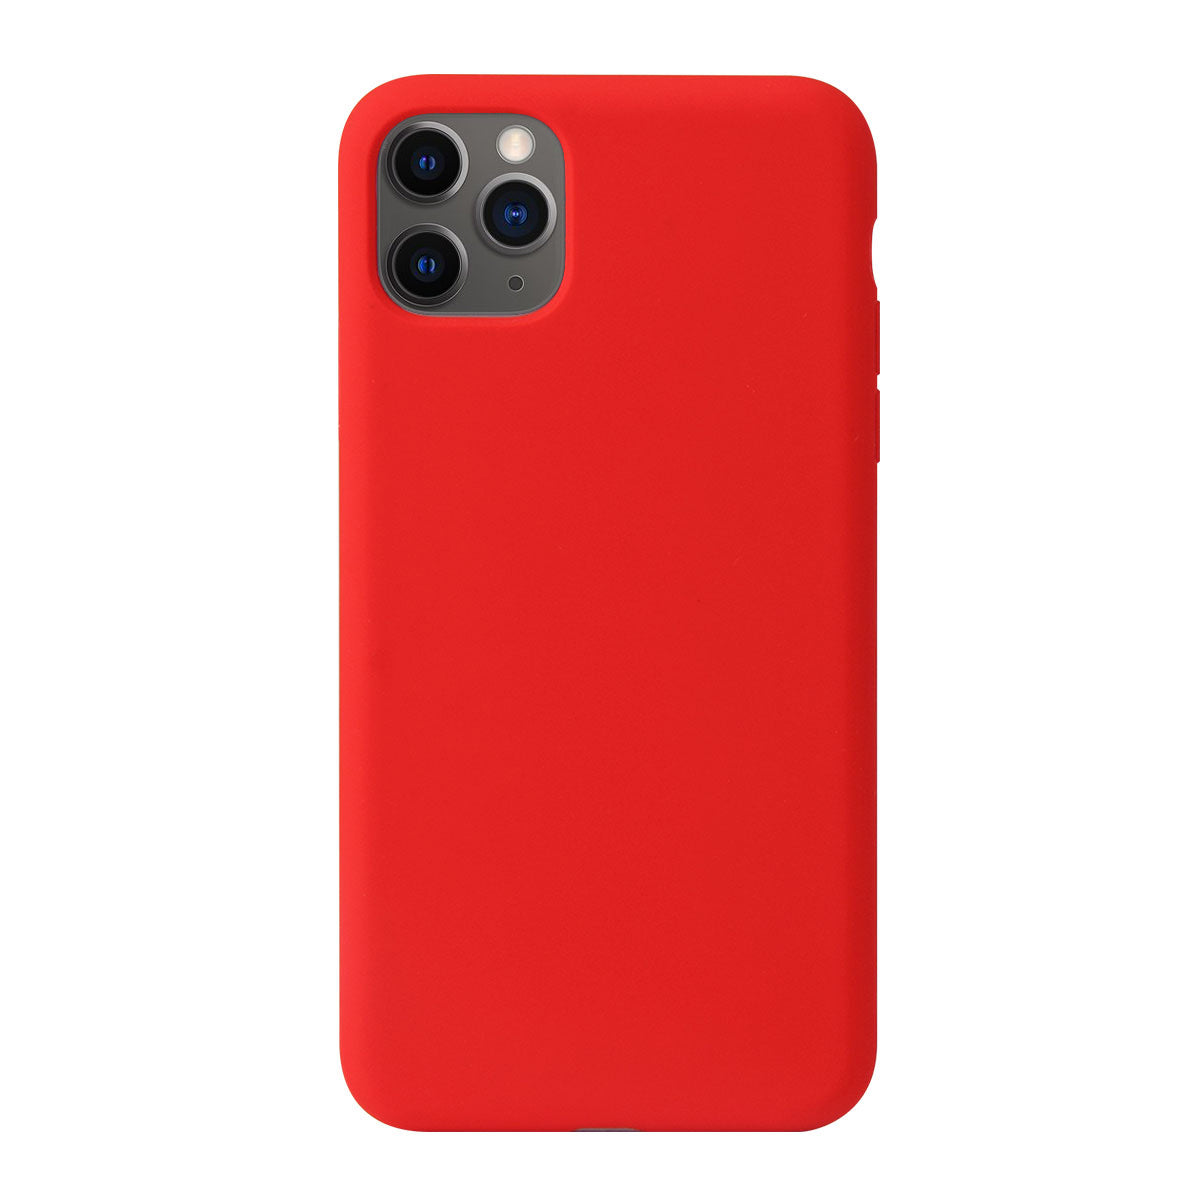 iCEO iPhone 11 Pro Max Silikon Case